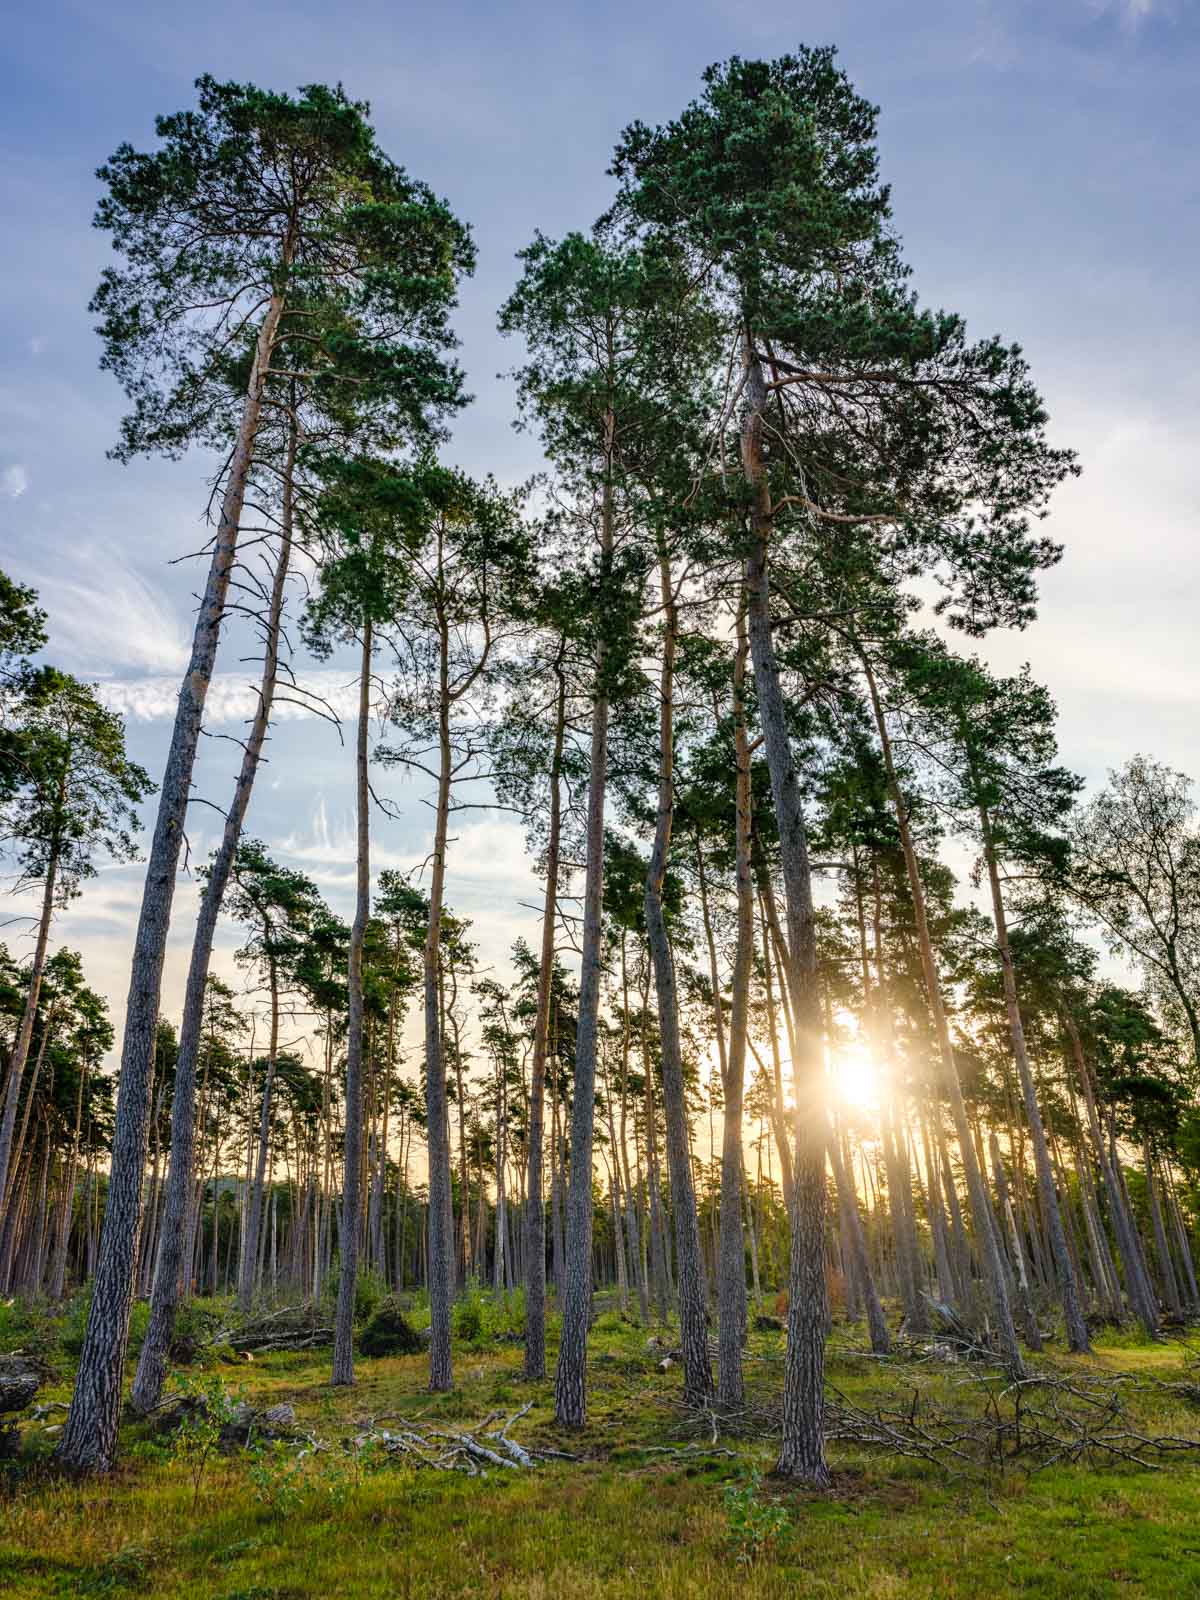 Pine trees at sunrise, 'Wistinghauser Senne' (Oerlinghausen, Germany).